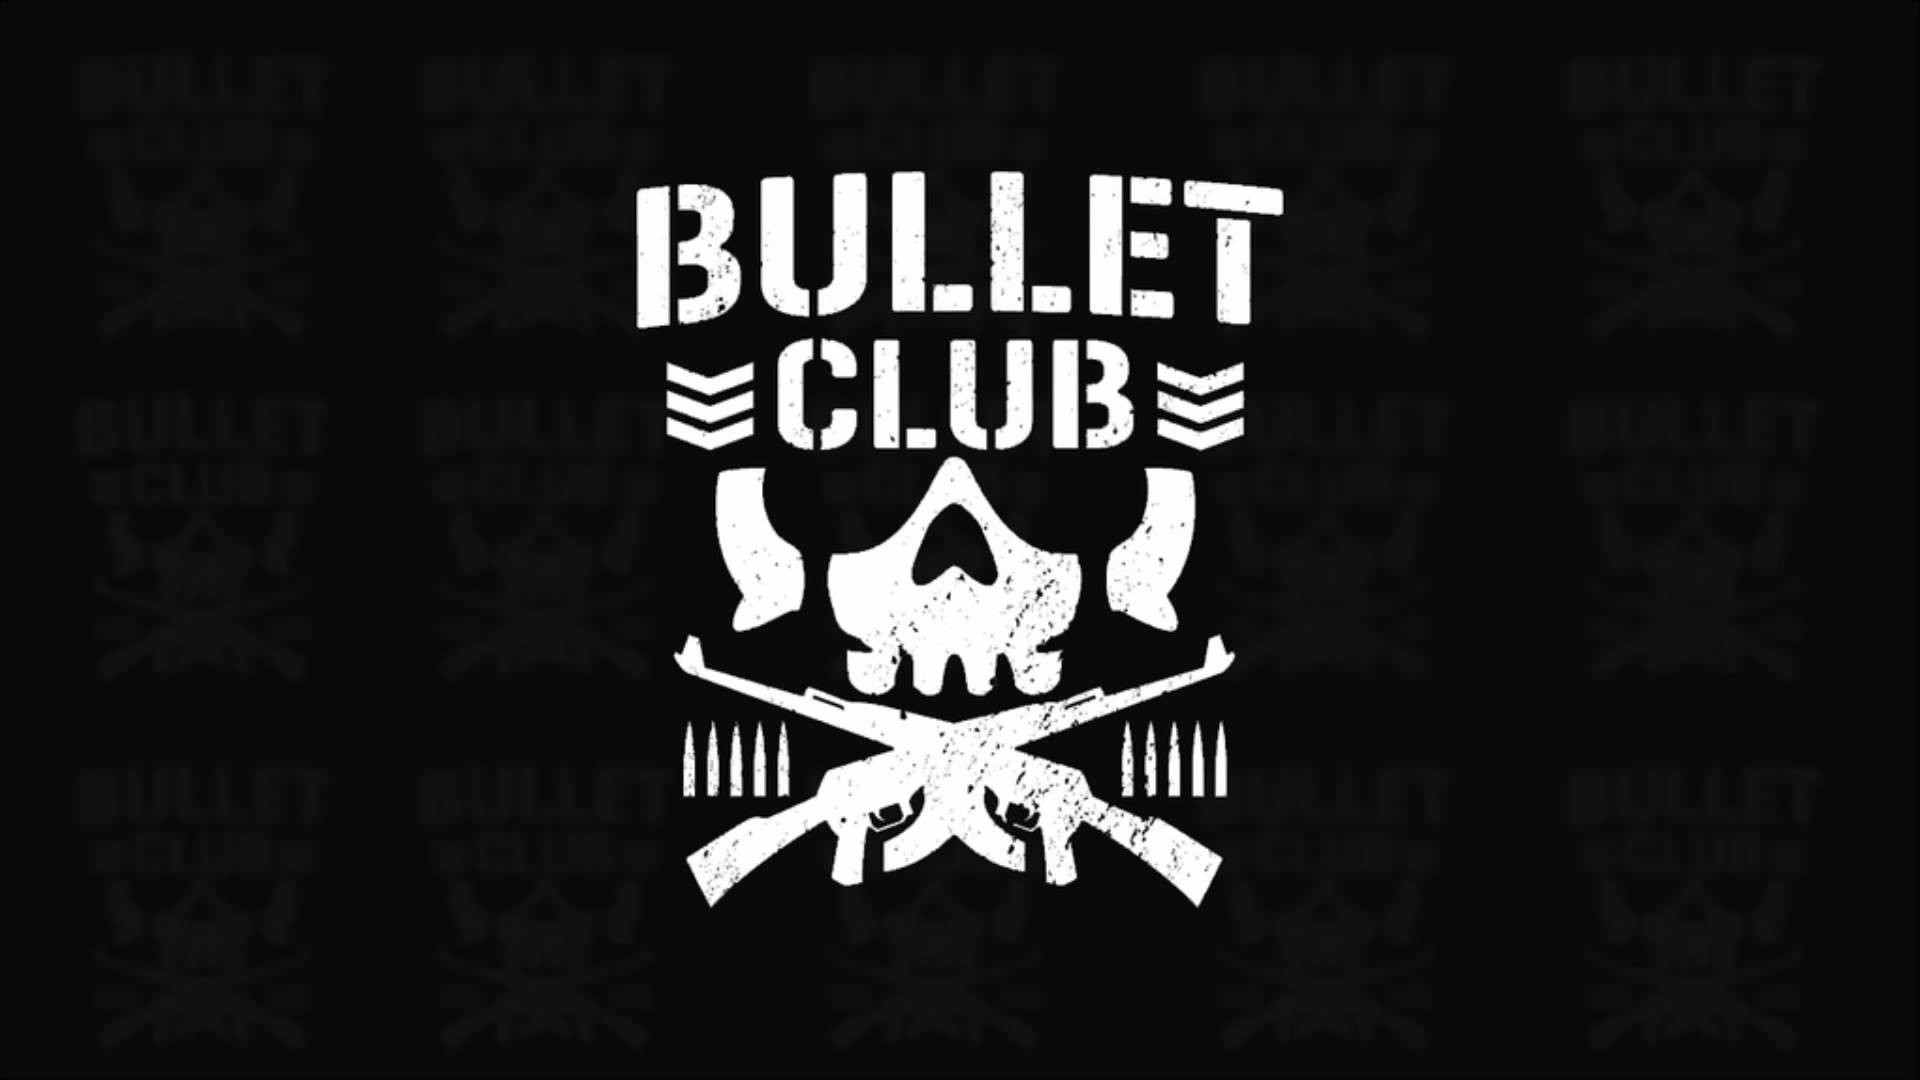 1920x1080 Tama Tonga Teases New Bullet Club Member - PWP Nation